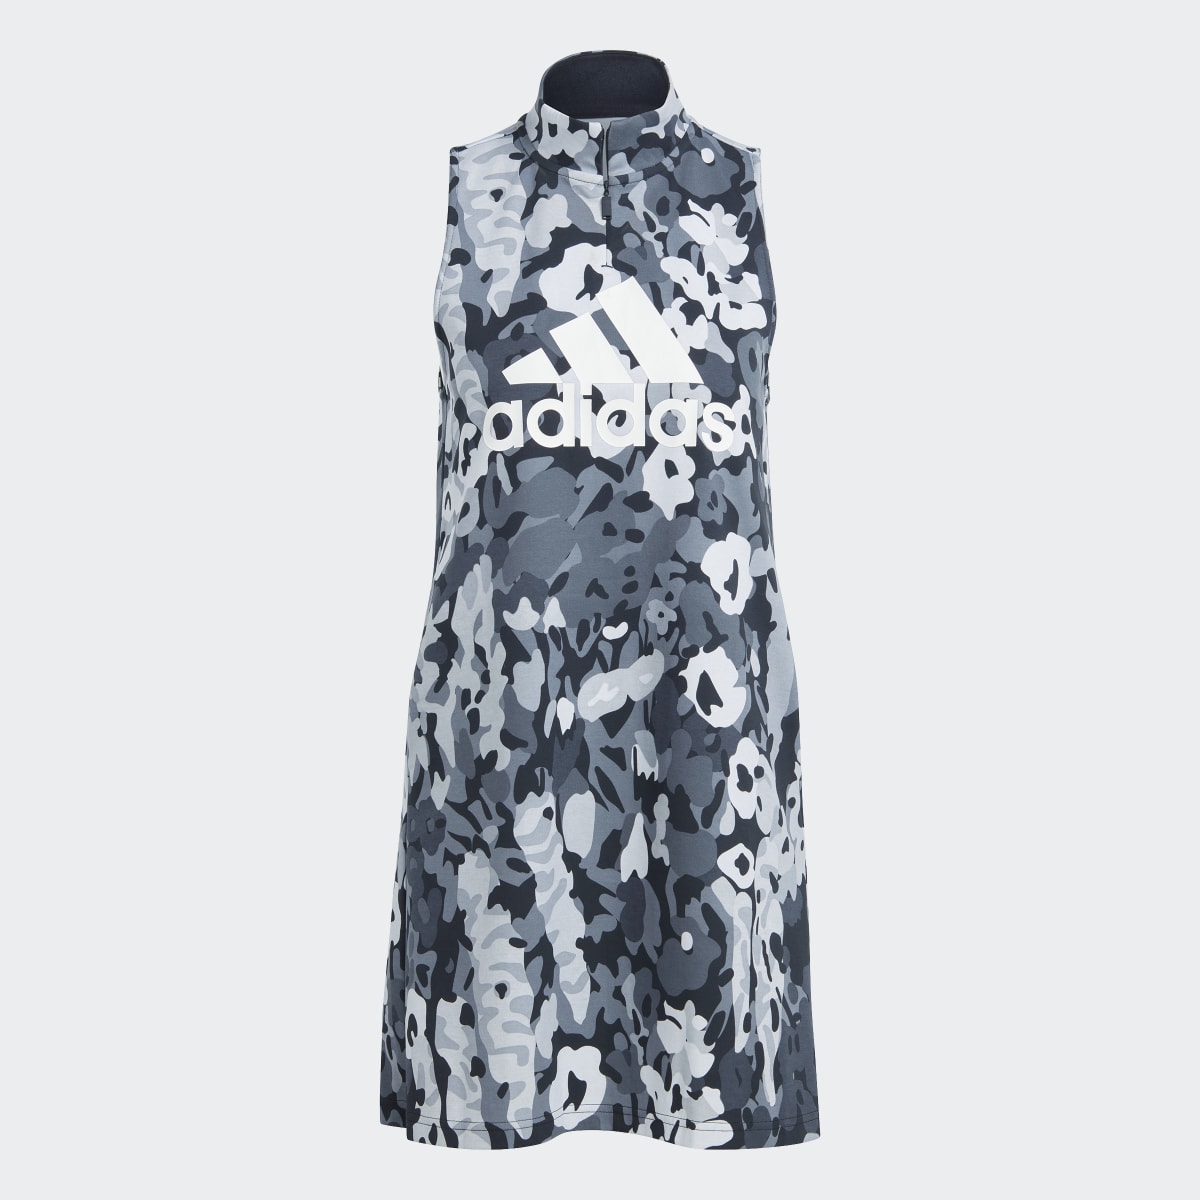 Adidas Graphic Dress. 5